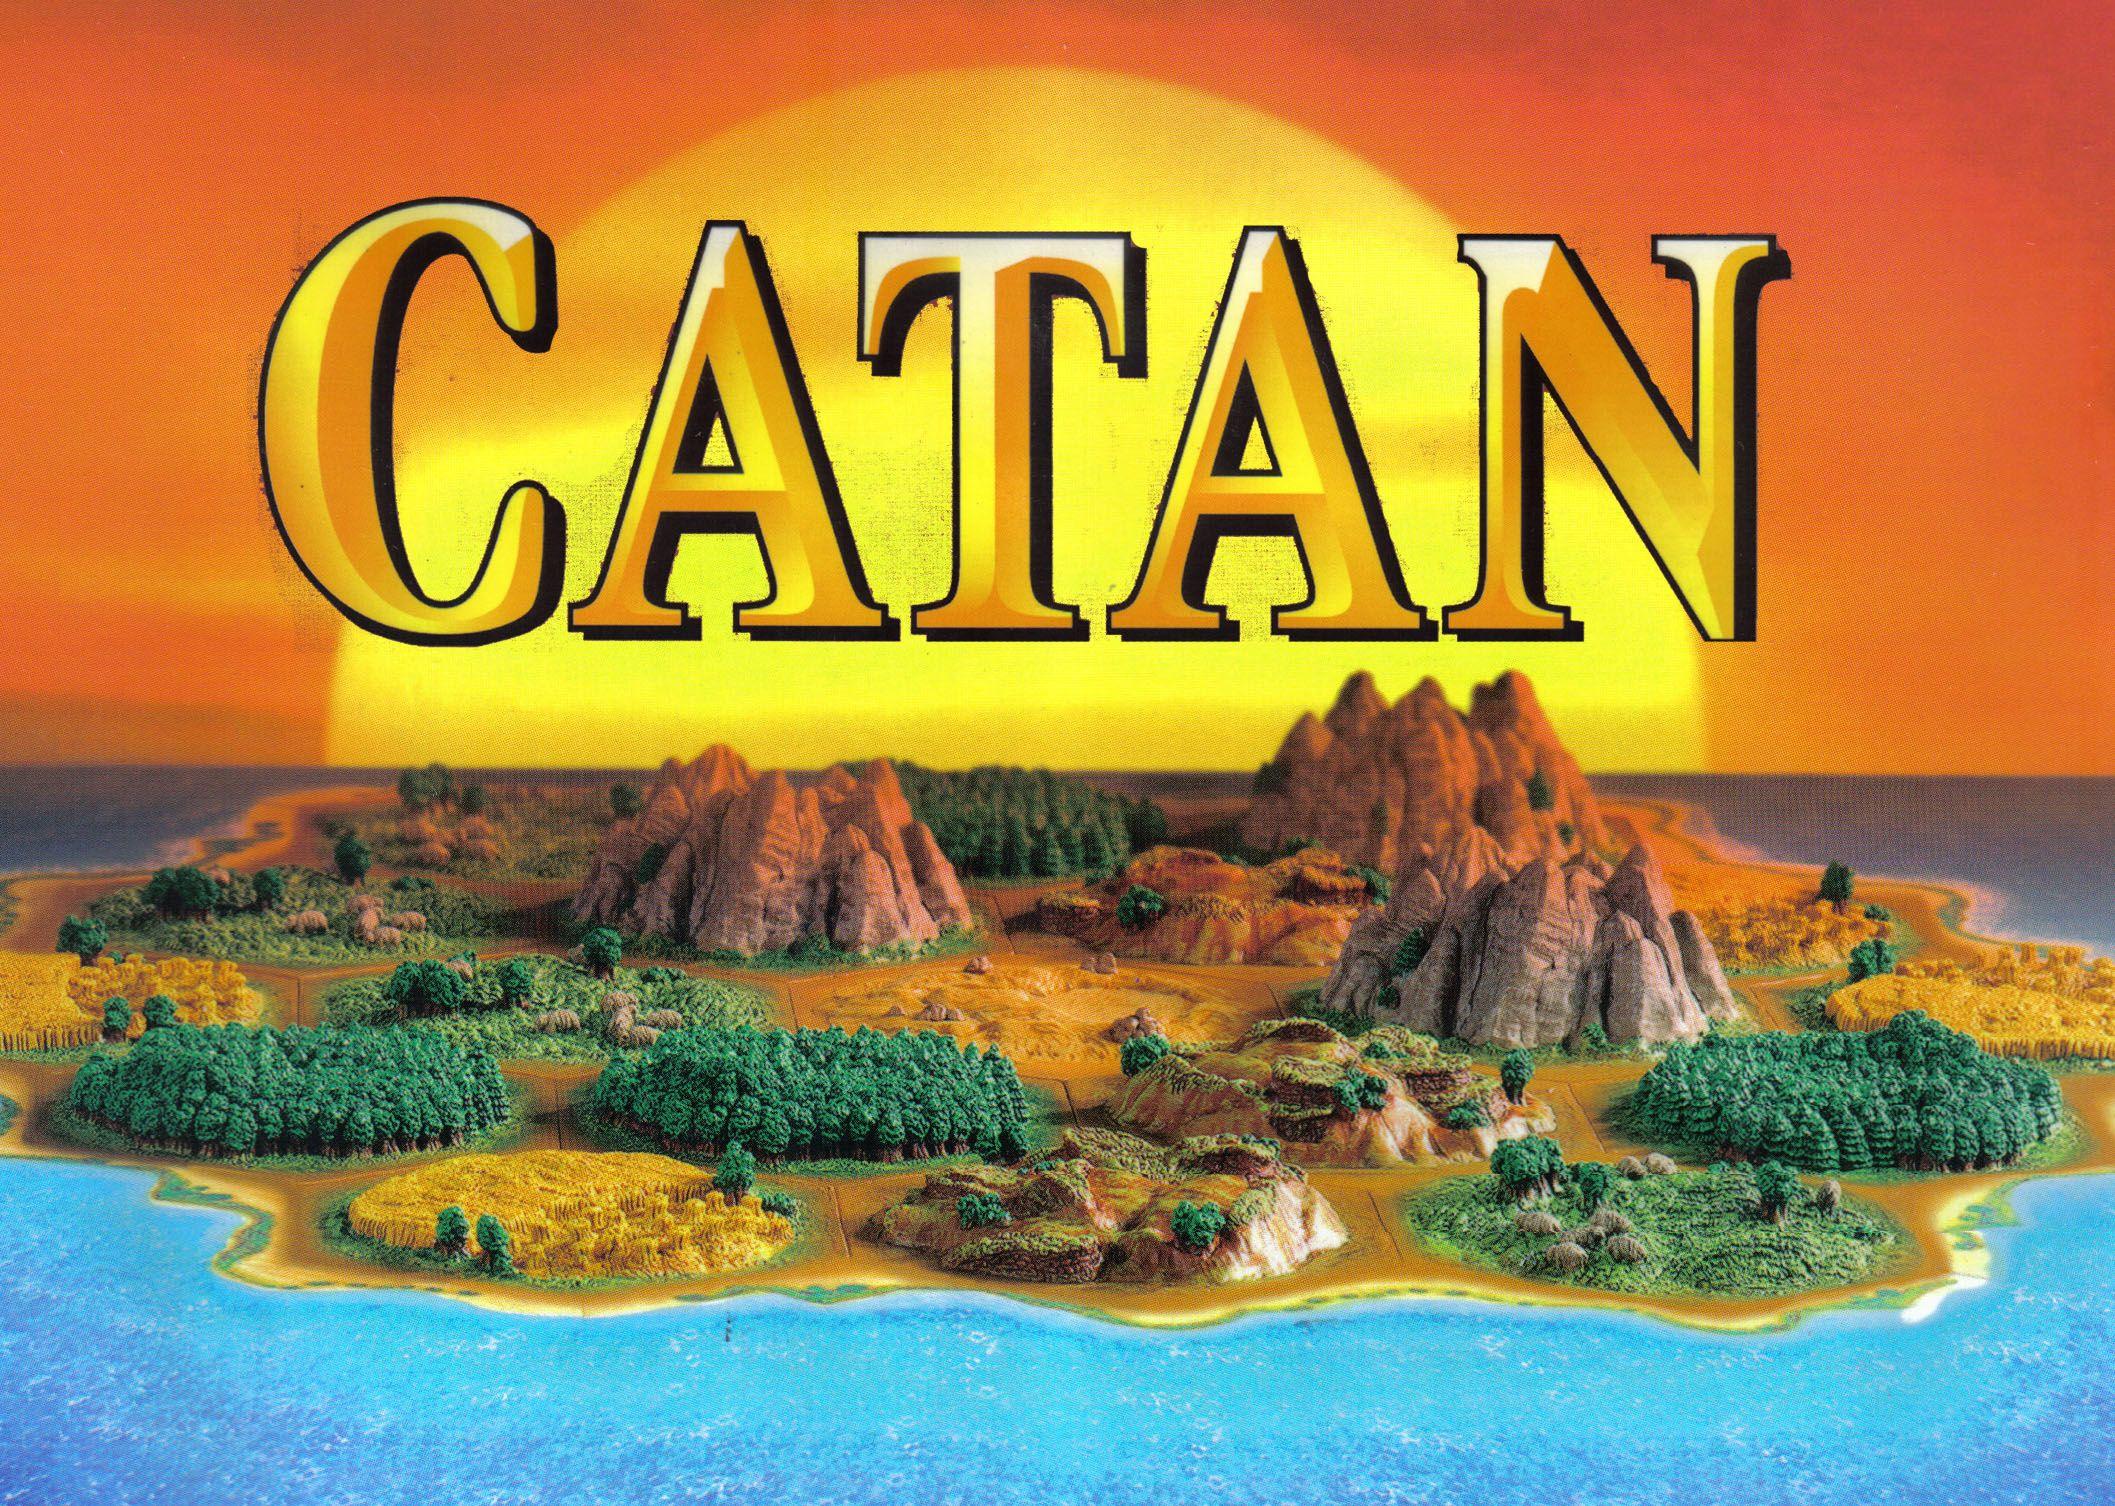 Catan Logo - Catan - Game Kastle Online